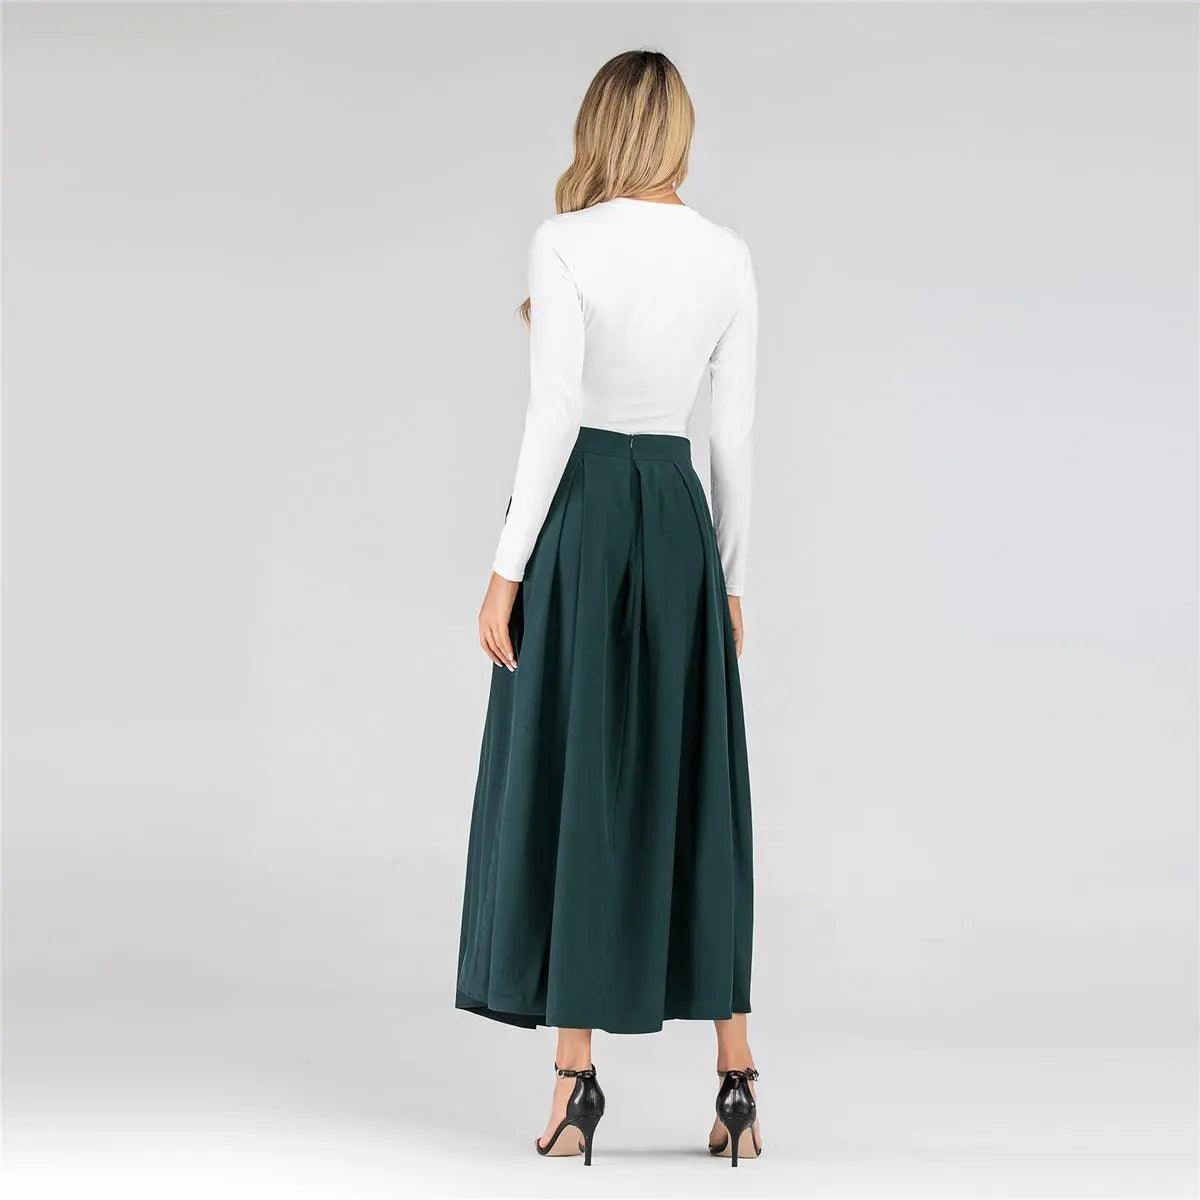 MS001 High Waist Midi Long Plain Skirt - Mariam's Collection